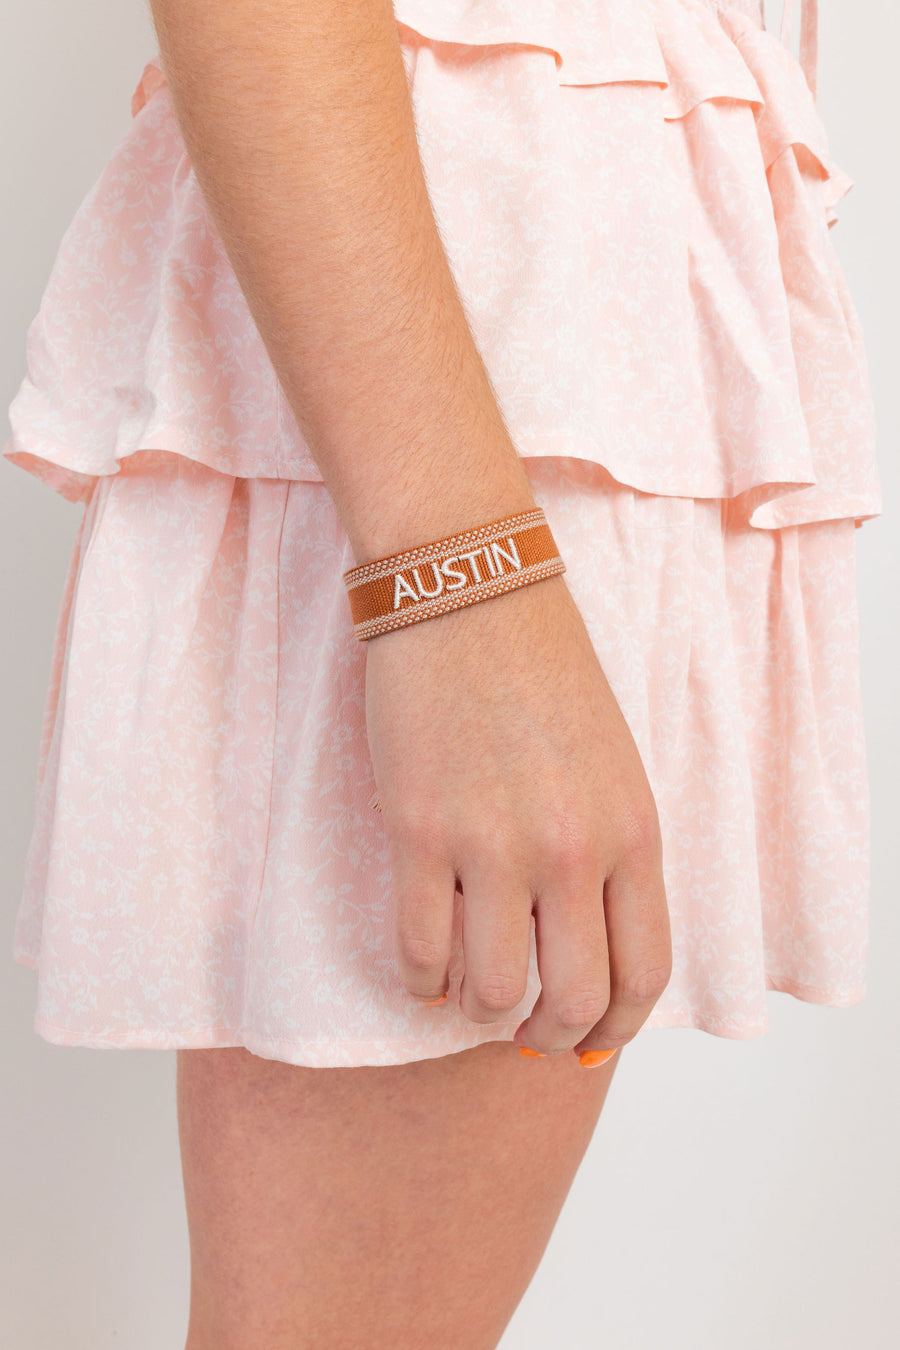 Austin Woven Bracelet *Limited*Edition*